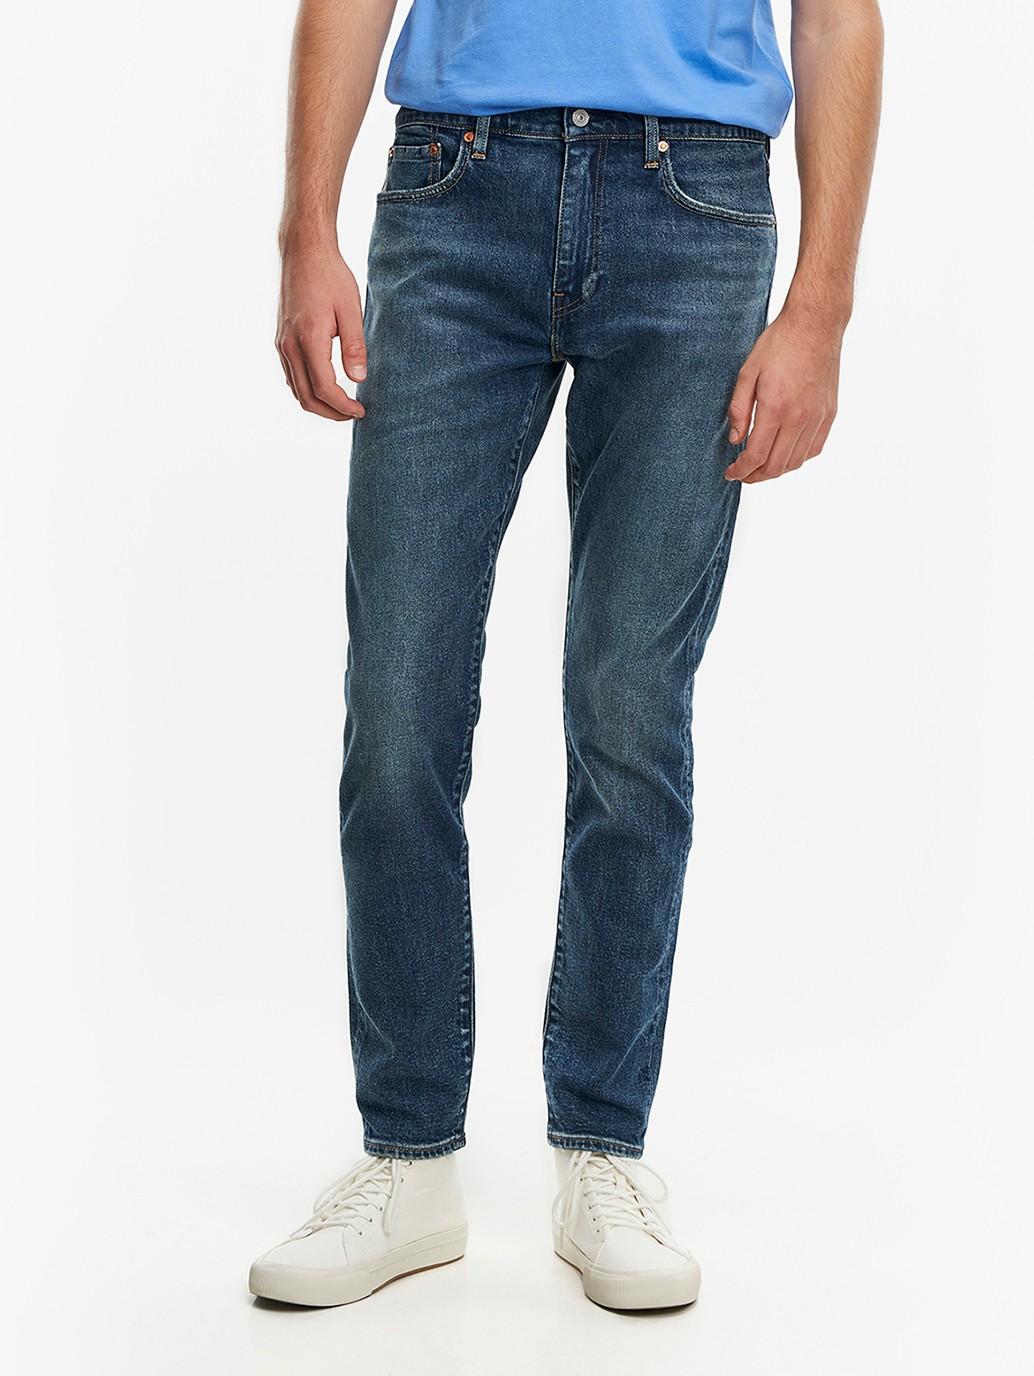 Buy Levi's® Men's 512™ Slim Taper Jeans | Levi’s® Official Online Store SG